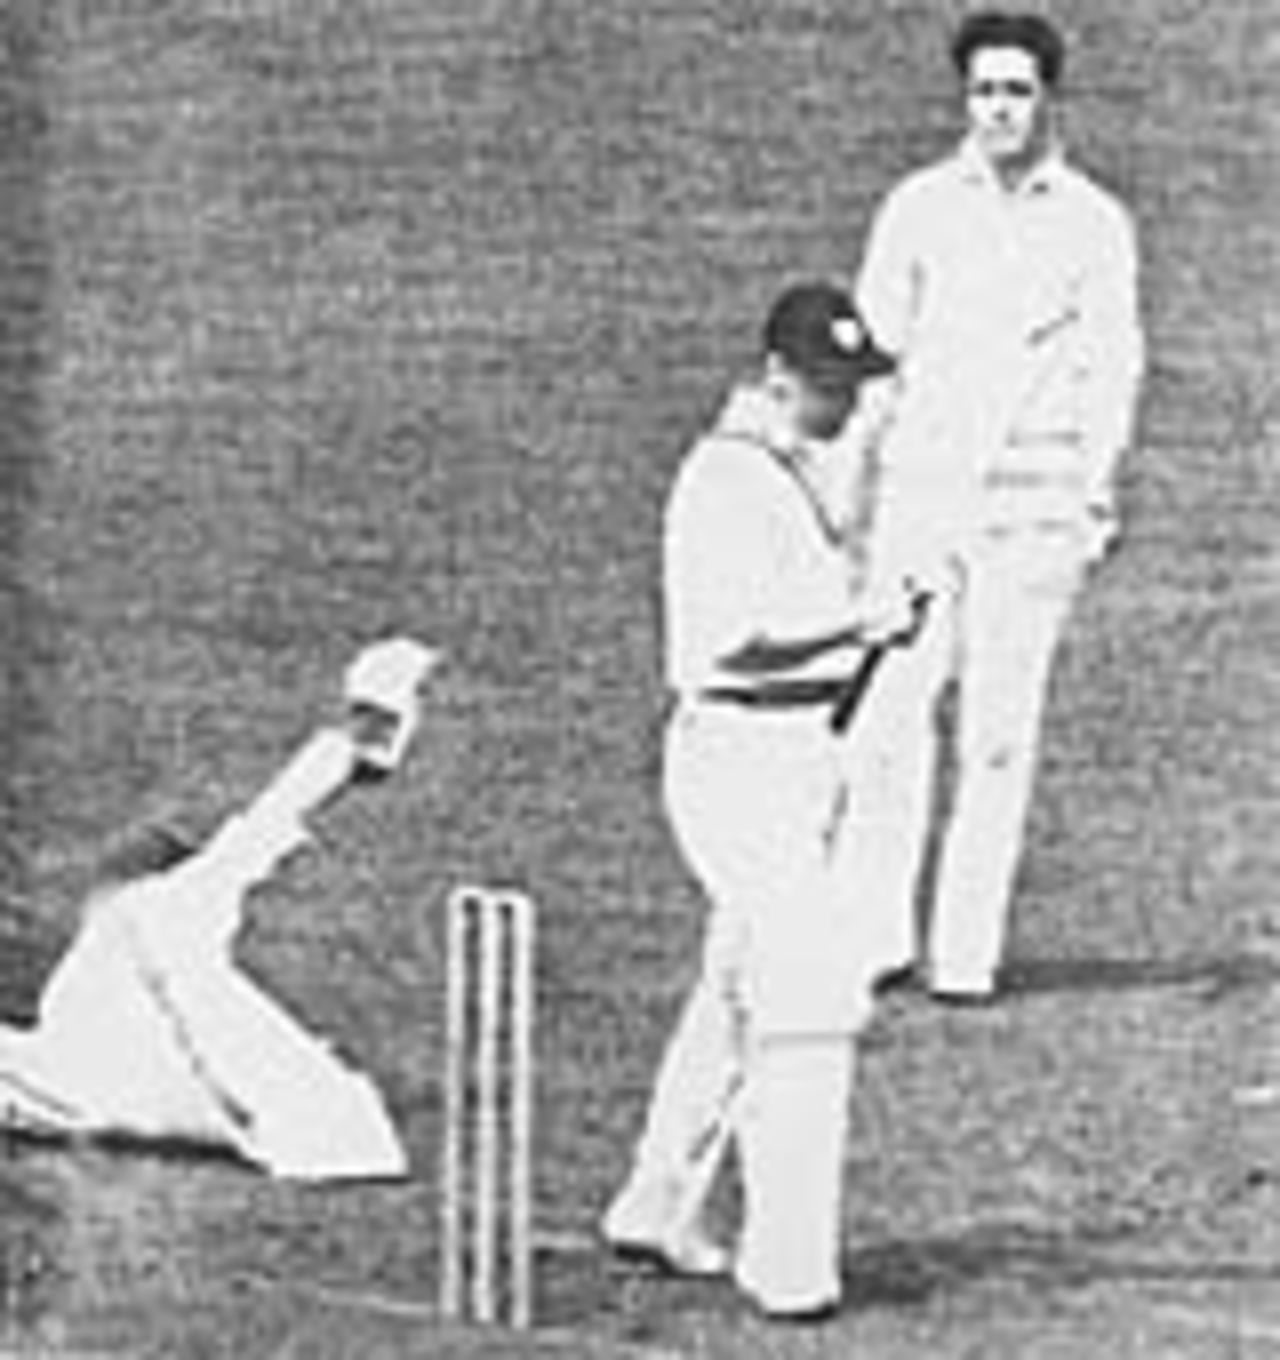 Godfrey Evans dives to catch Don Kenyon, England v The Rest, Bradford, May 31, 1950